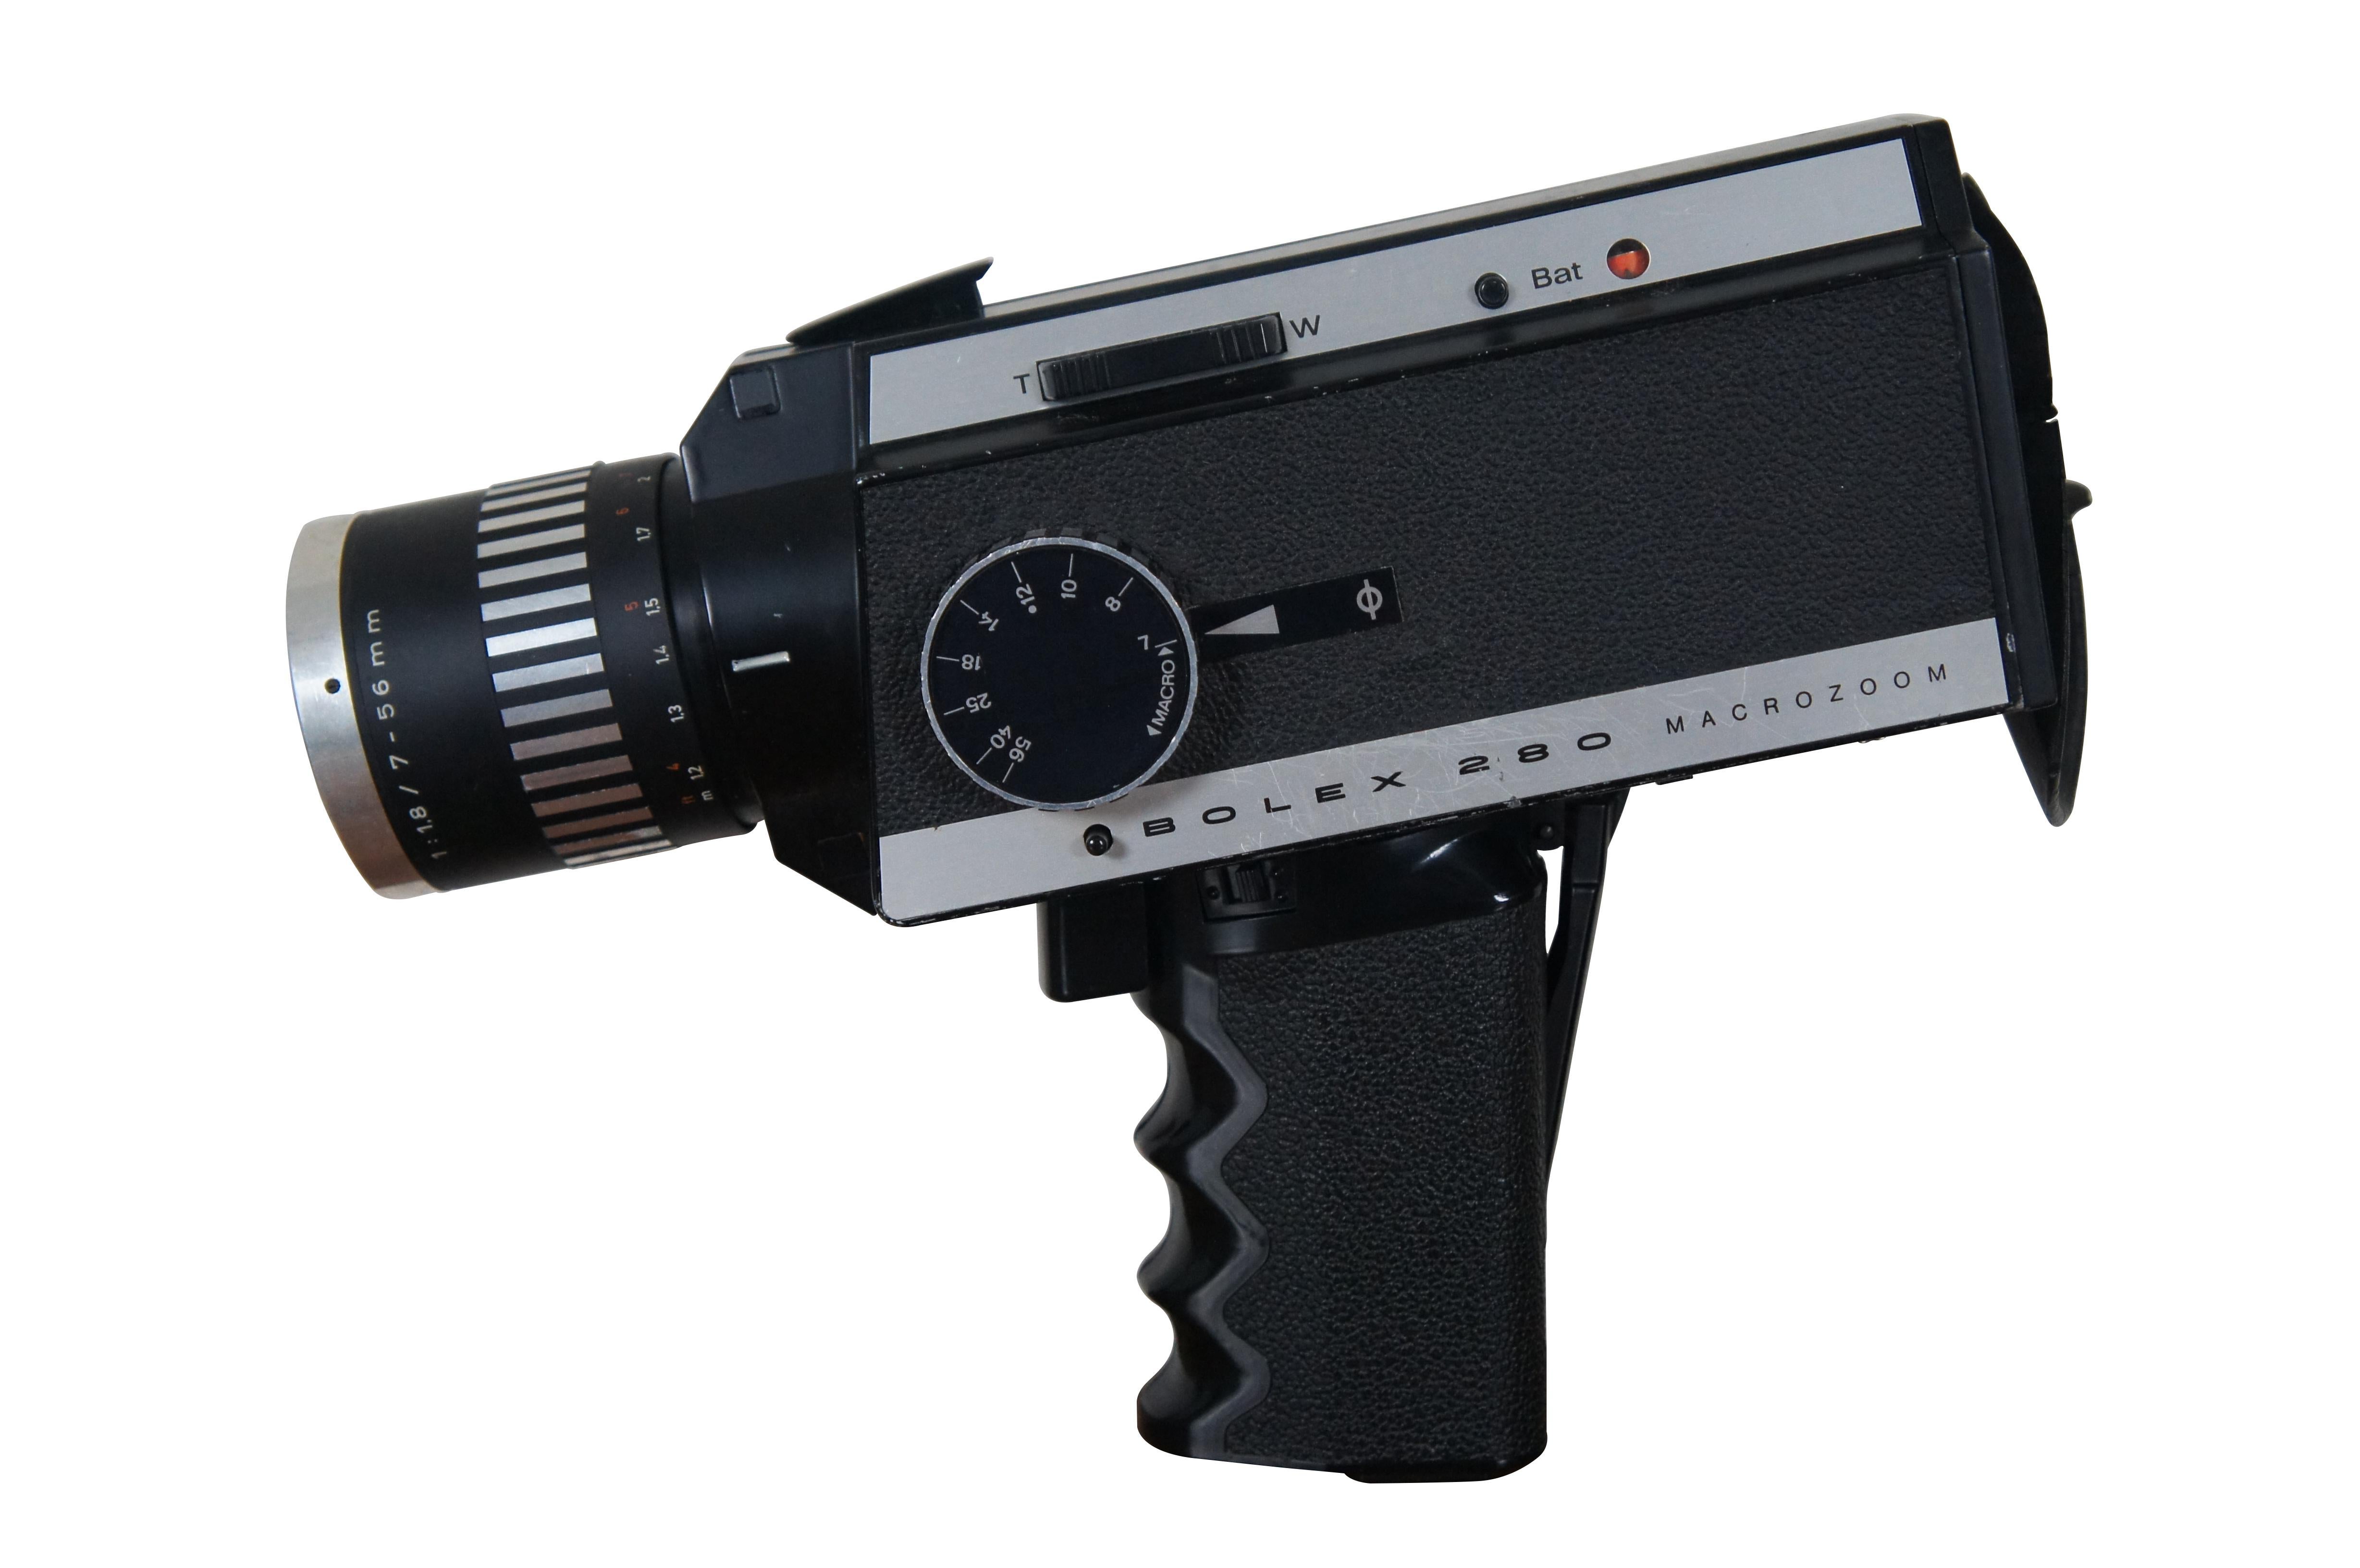 Vintage Bolex 280 Macrozoom video camera and case.  Includes camera strap, remote shutter button, lens cap, rubber lens hood, and camera strap.  Made in Austria.

Dimensions:
Case - 11.25” x 4” x 8.5” / Camera - 9.75” x 3” x 7.5” (Width x Depth x